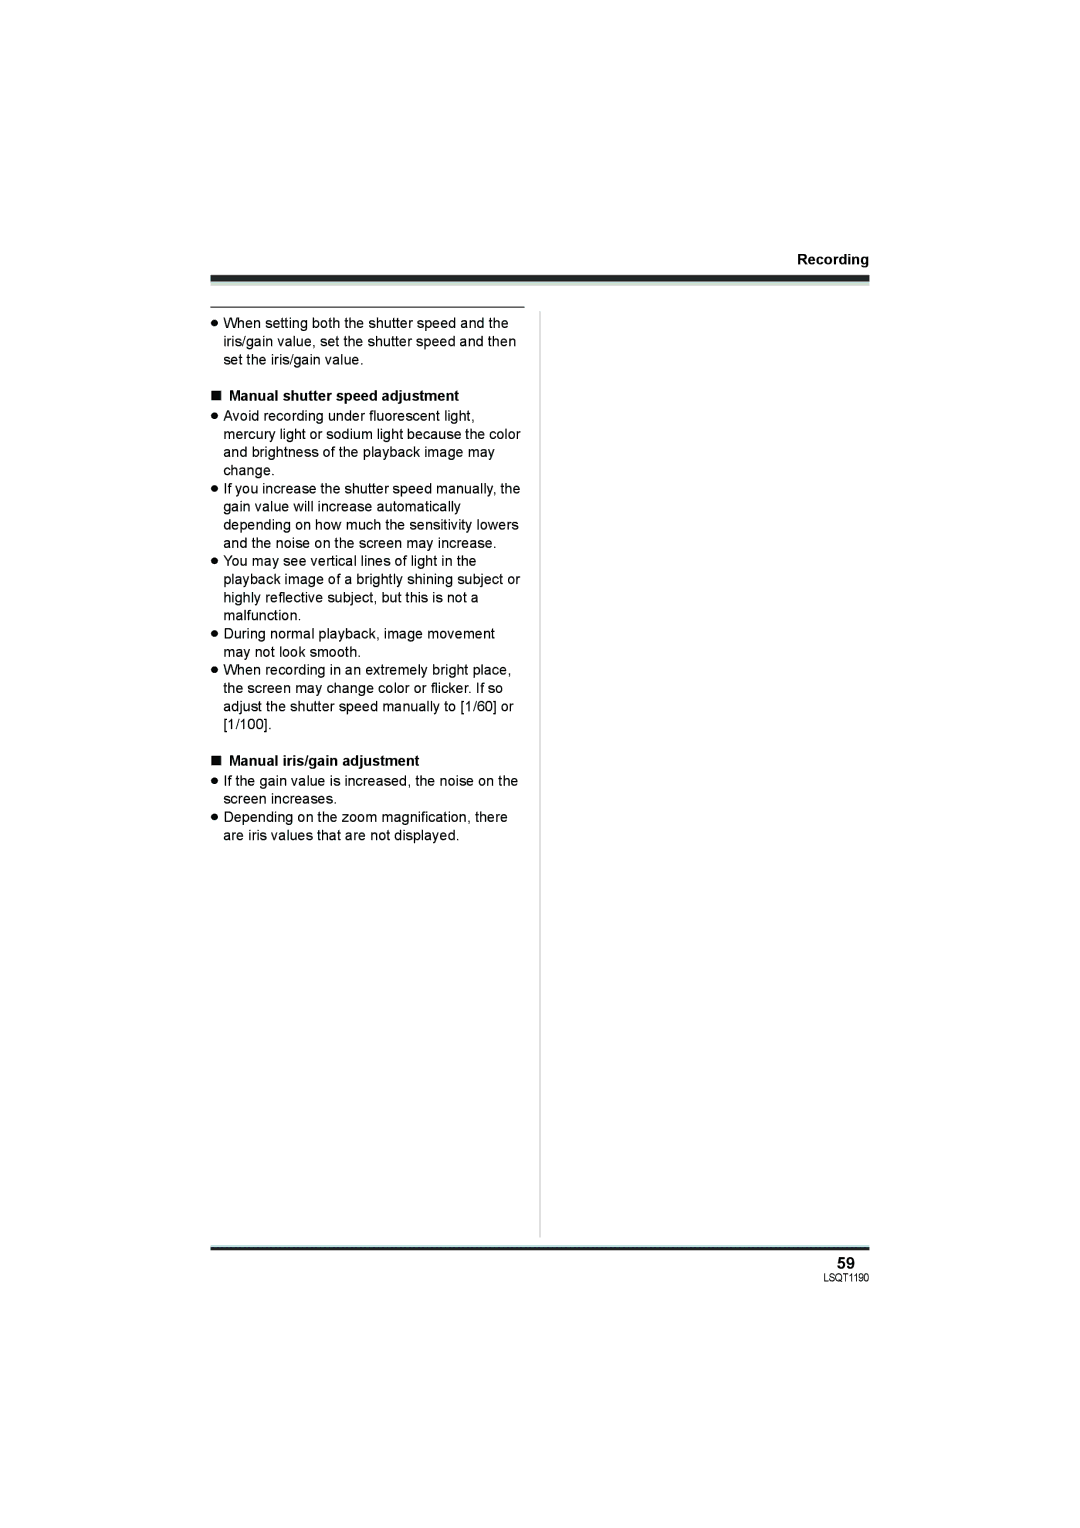 Panasonic SDR-H18, SDR-H200 operating instructions Manual shutter speed adjustment, Manual iris/gain adjustment 